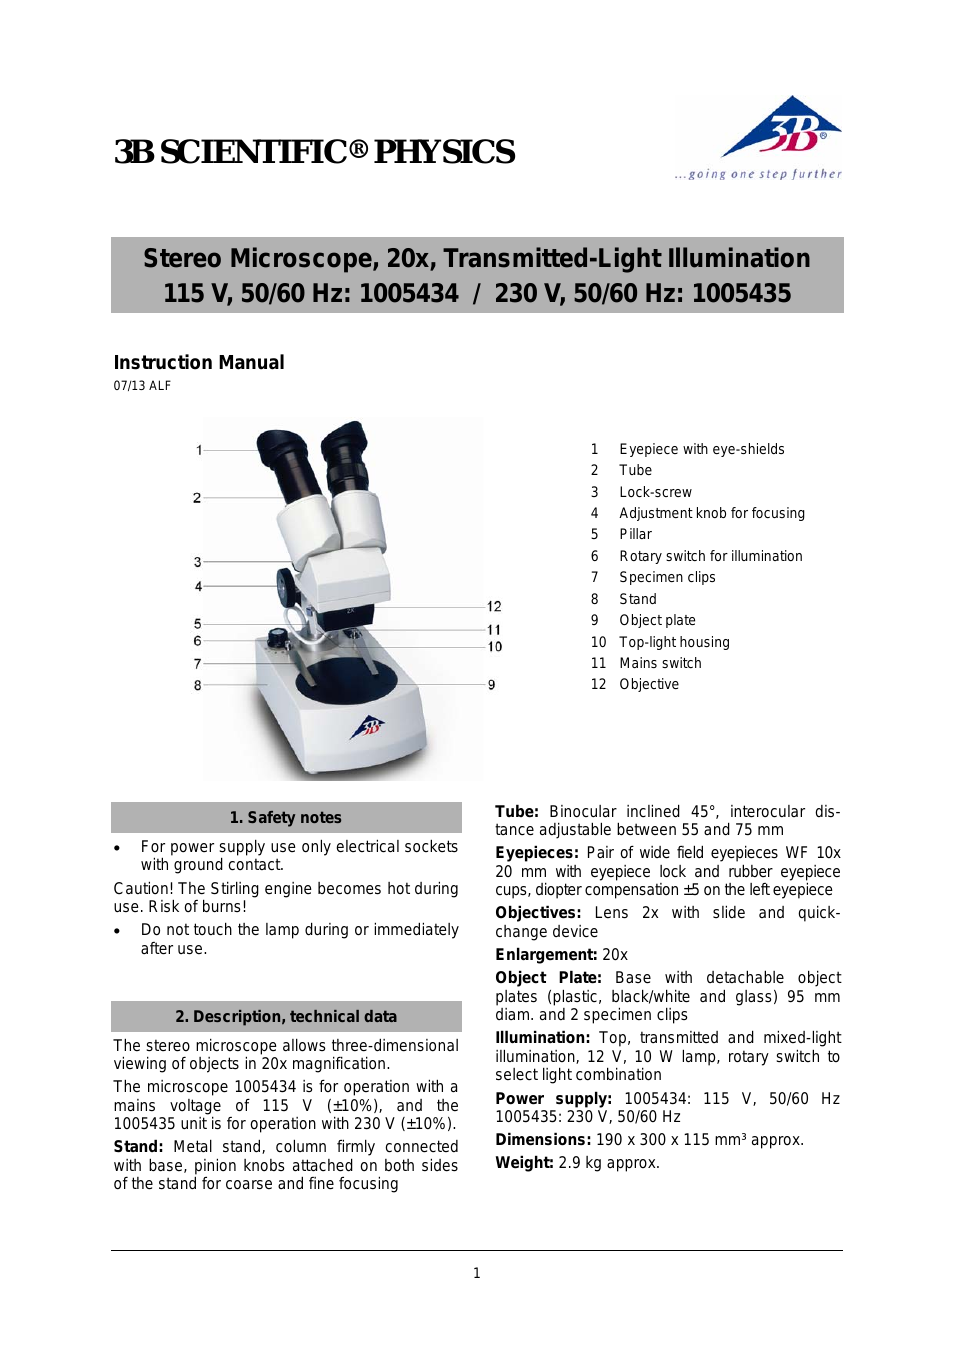 Stereo Microscope, 20x, Transmitted-Light Illumination (115 V, 50__60 Hz)